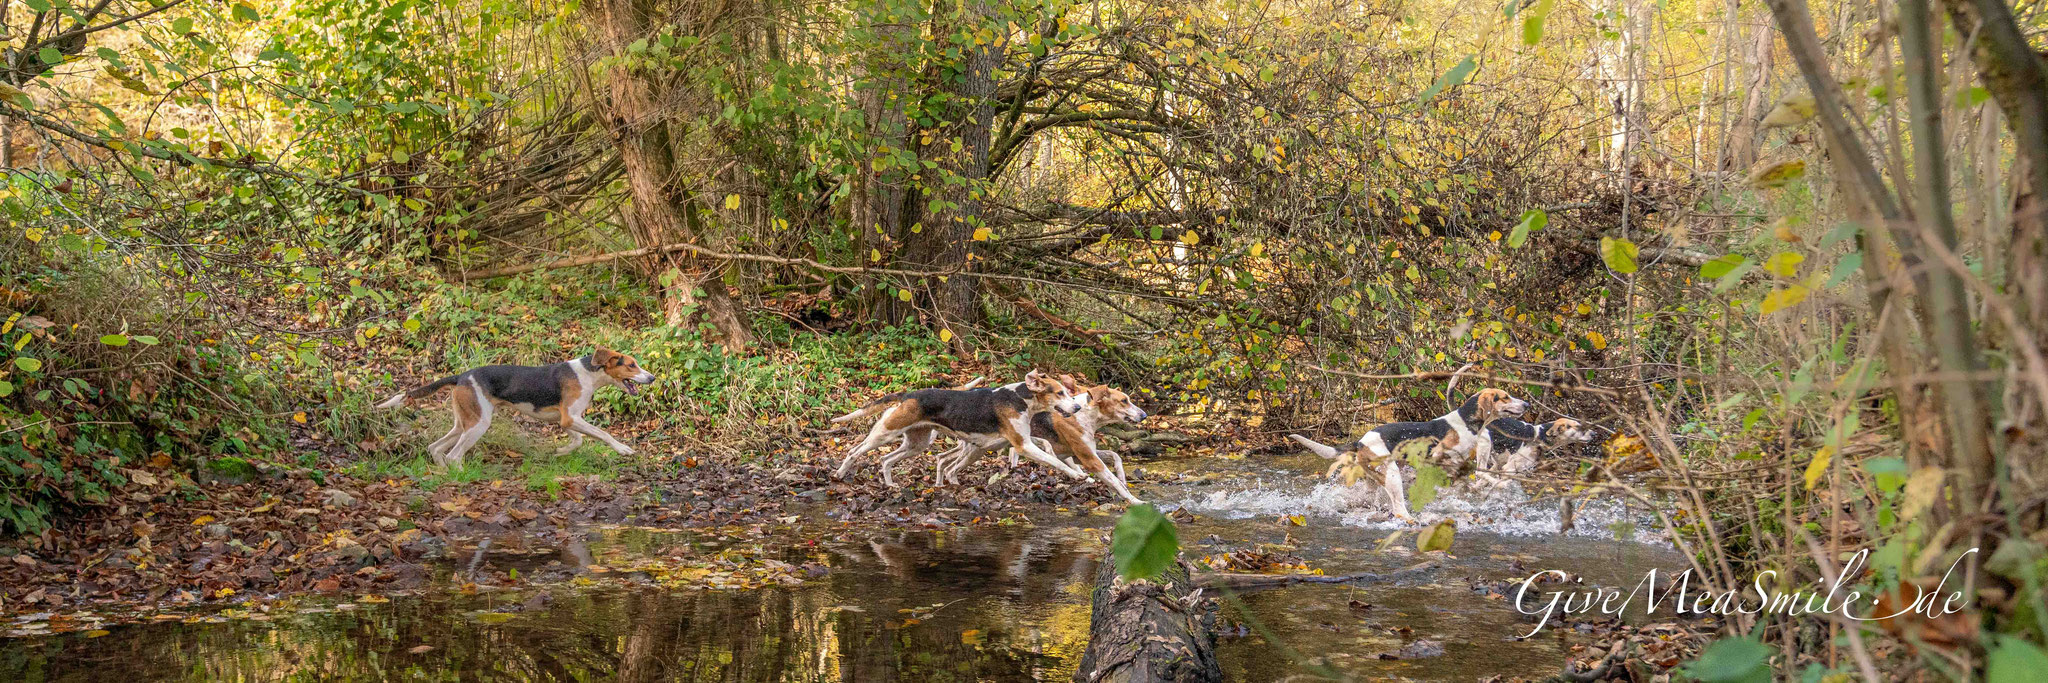 Jagdfotos vom Team @Givemeasmile.de auf der Fotojagd, Peter Jäger #Hardtmeute #BadischerSchleppjagdverein #GrandAngloFrancais #JagdhornbläserKünzelsau #jagdreiter #foxhounds #jagdreiten #schleppjagd